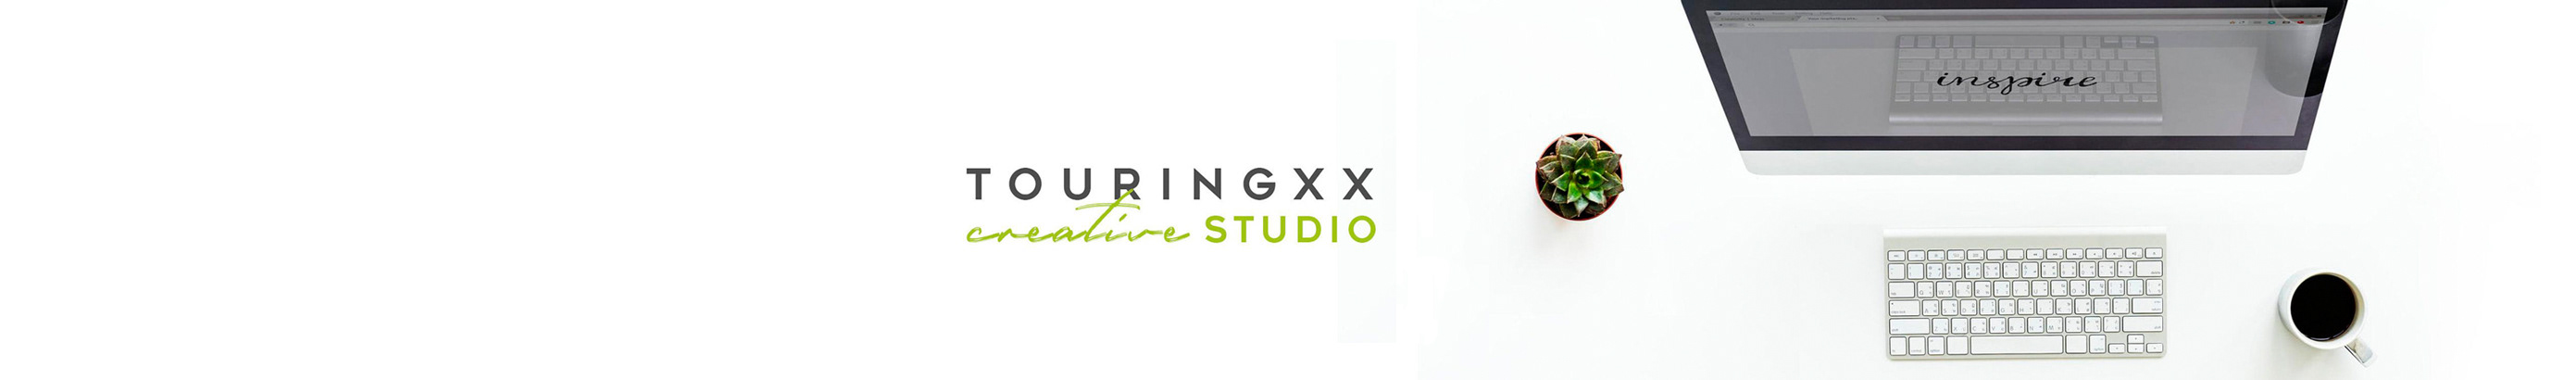 Banner de perfil de Touringxx Creative Studio